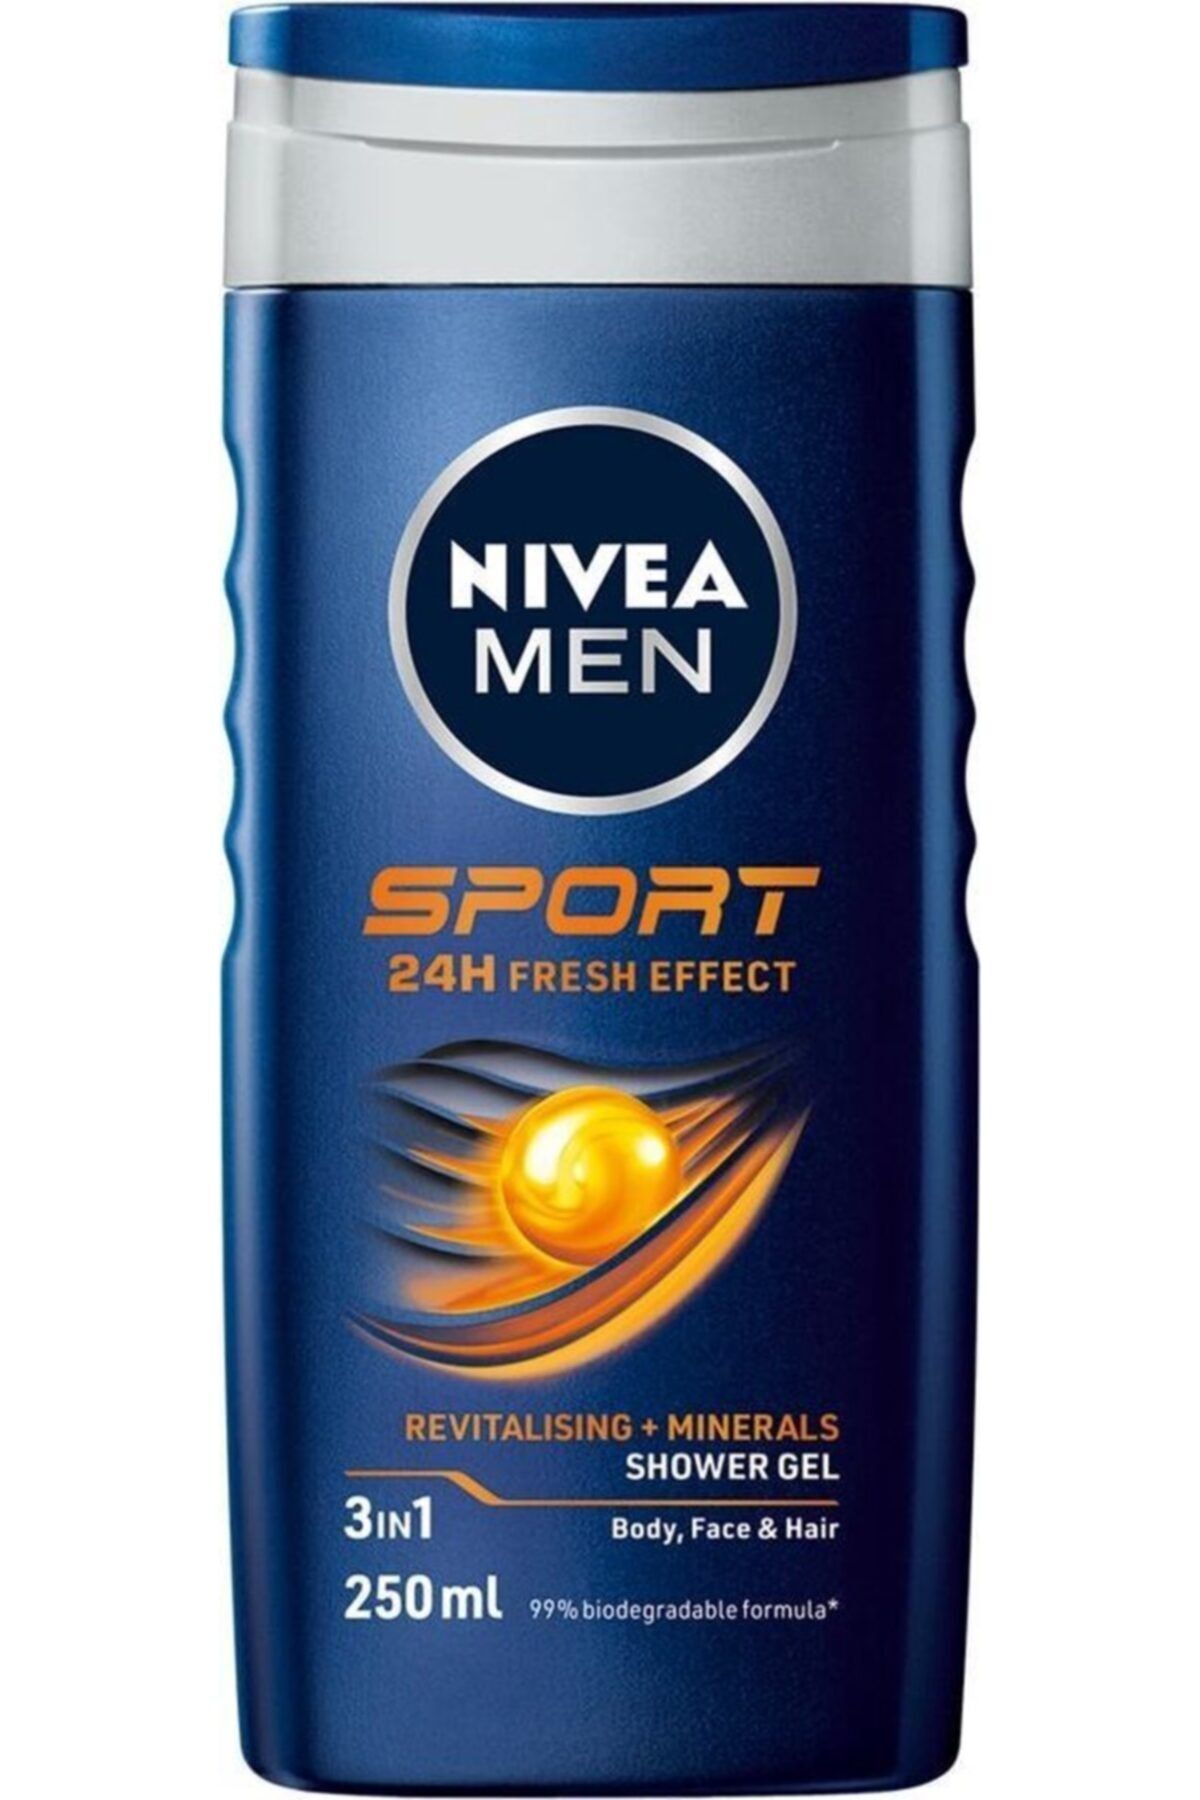 NIVEA Men Sport 24h Fresh Effect